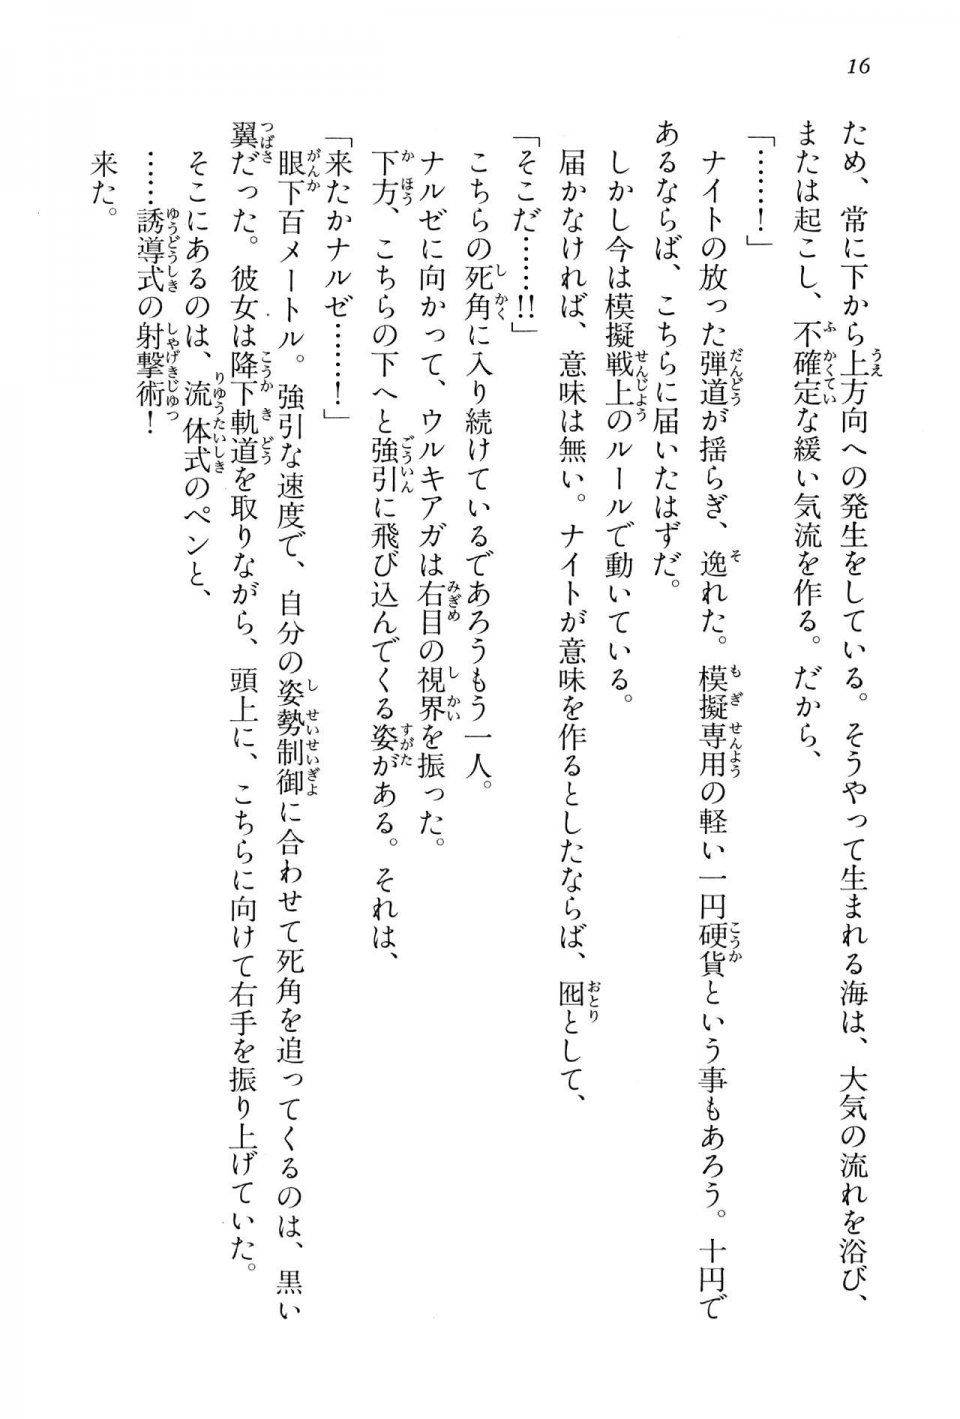 Kyoukai Senjou no Horizon BD Special Mininovel Vol 2(1B) - Photo #20